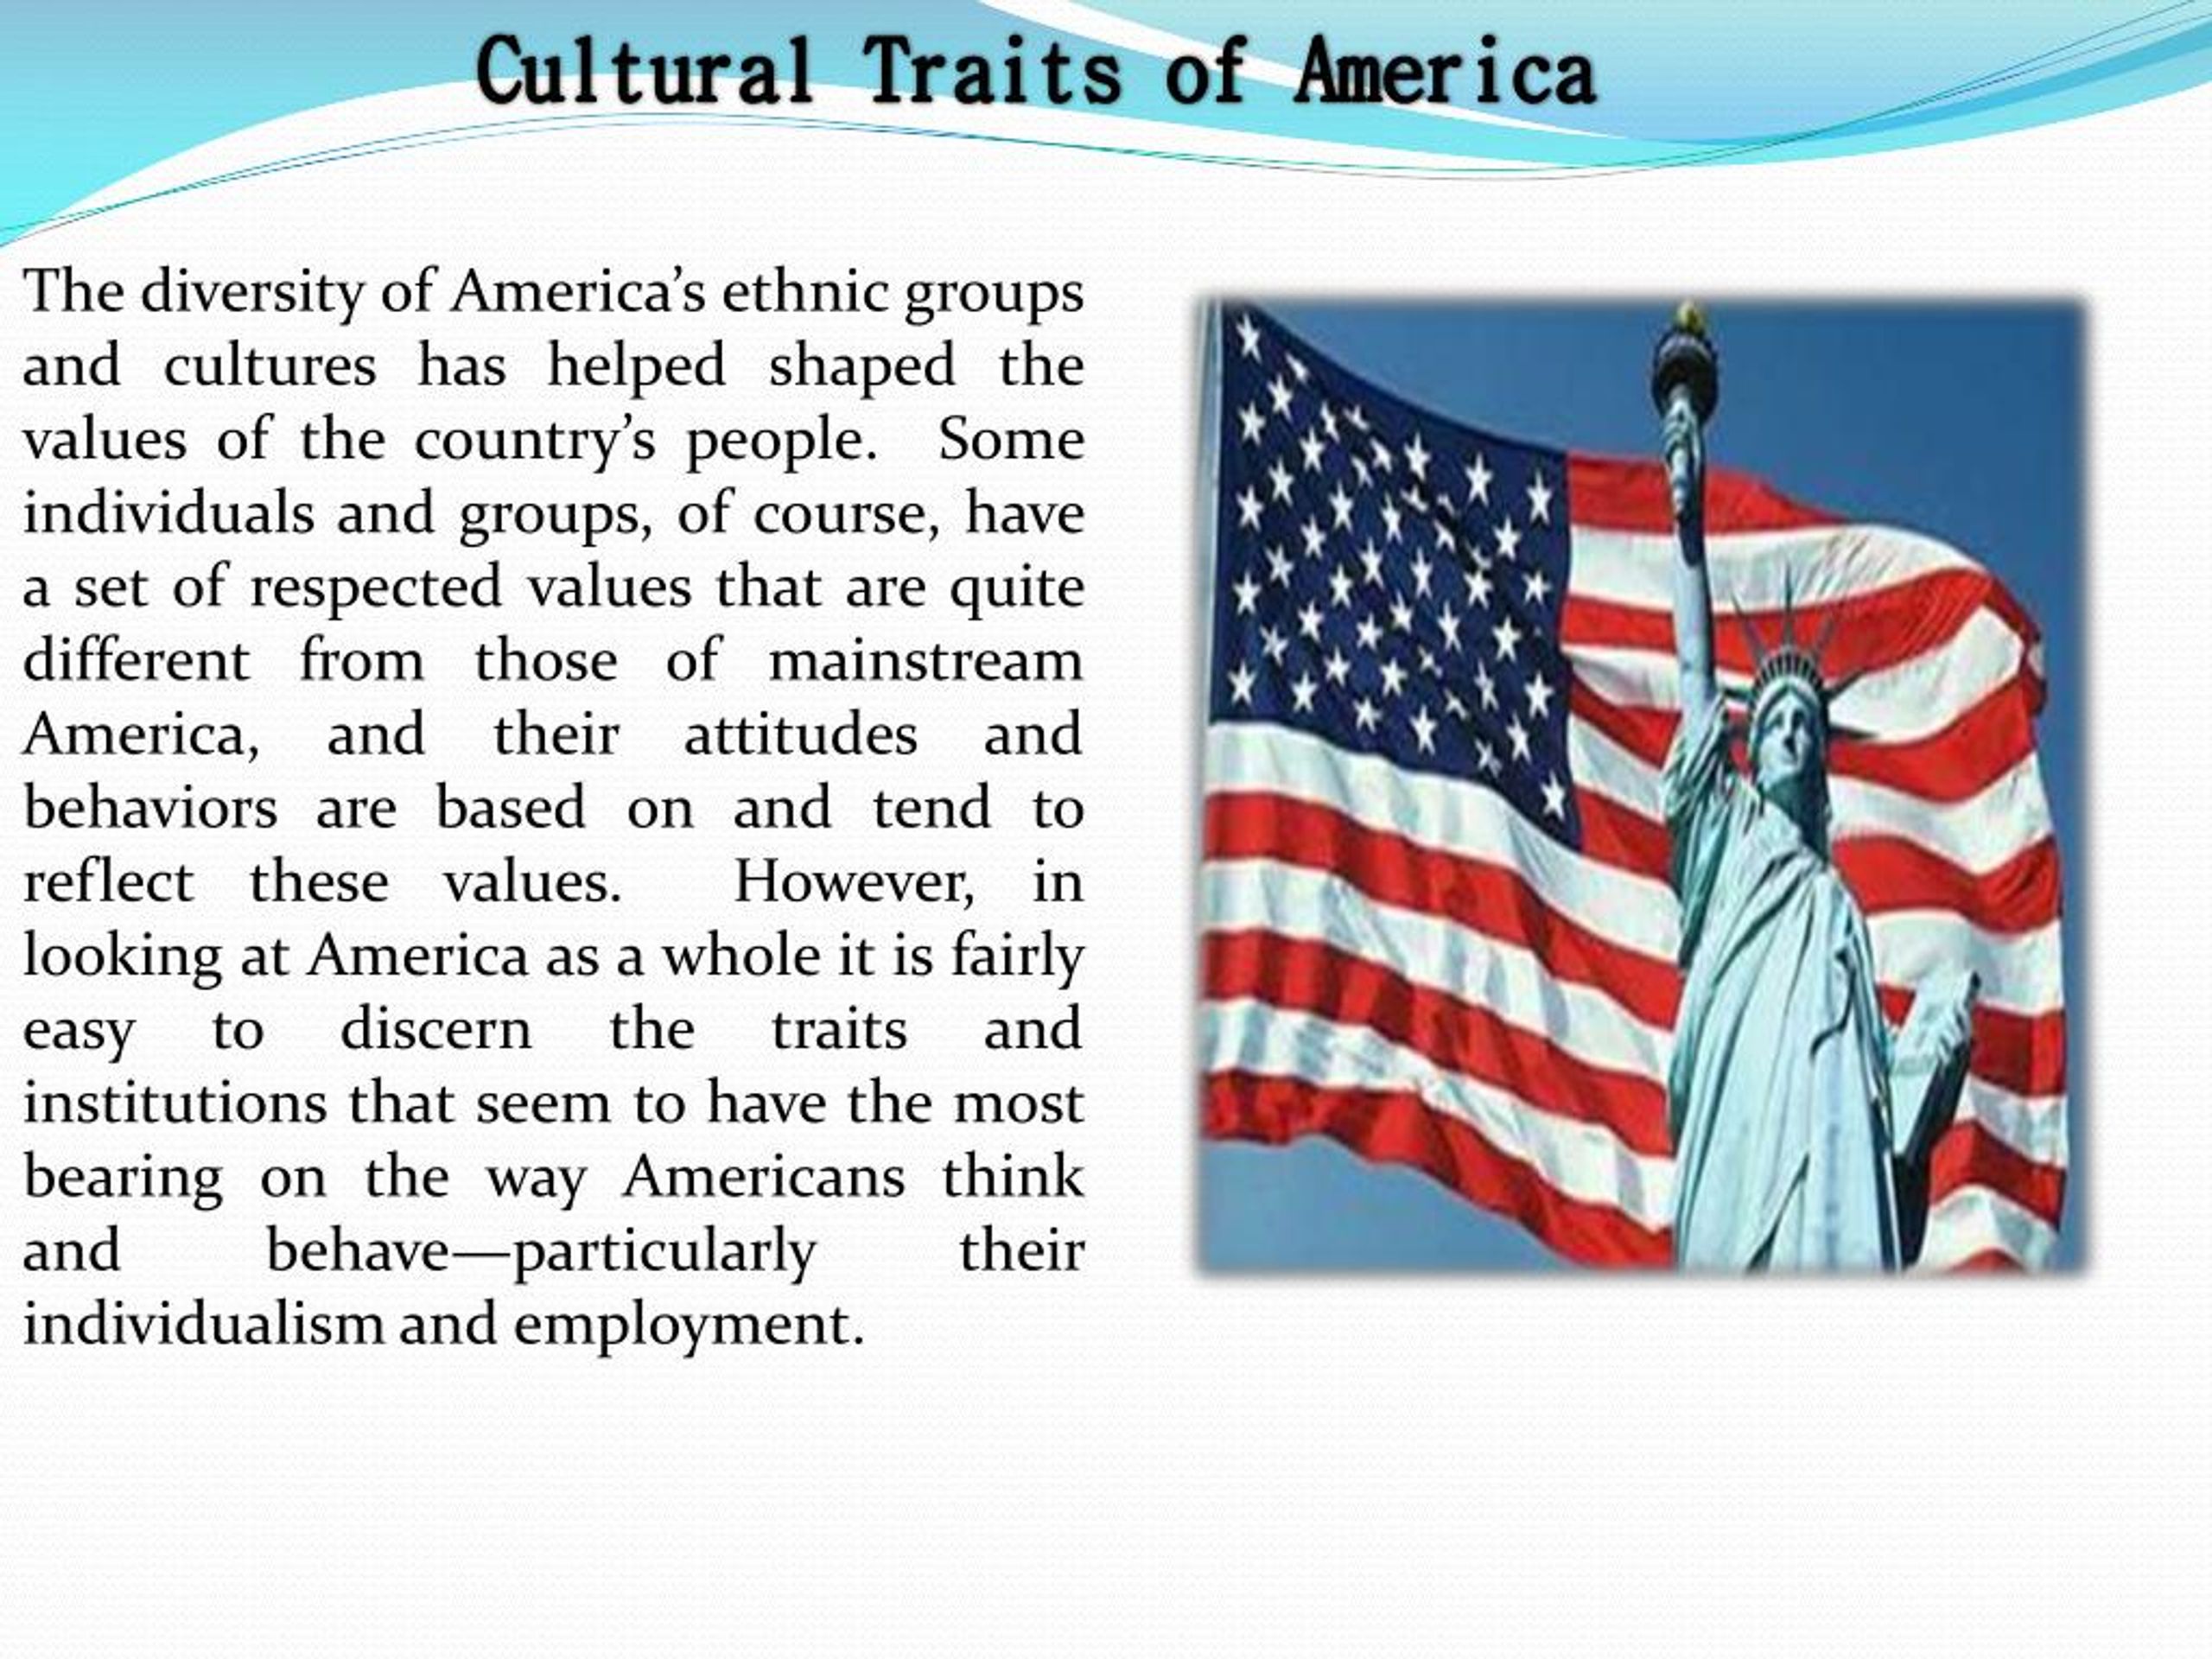 presentation about america